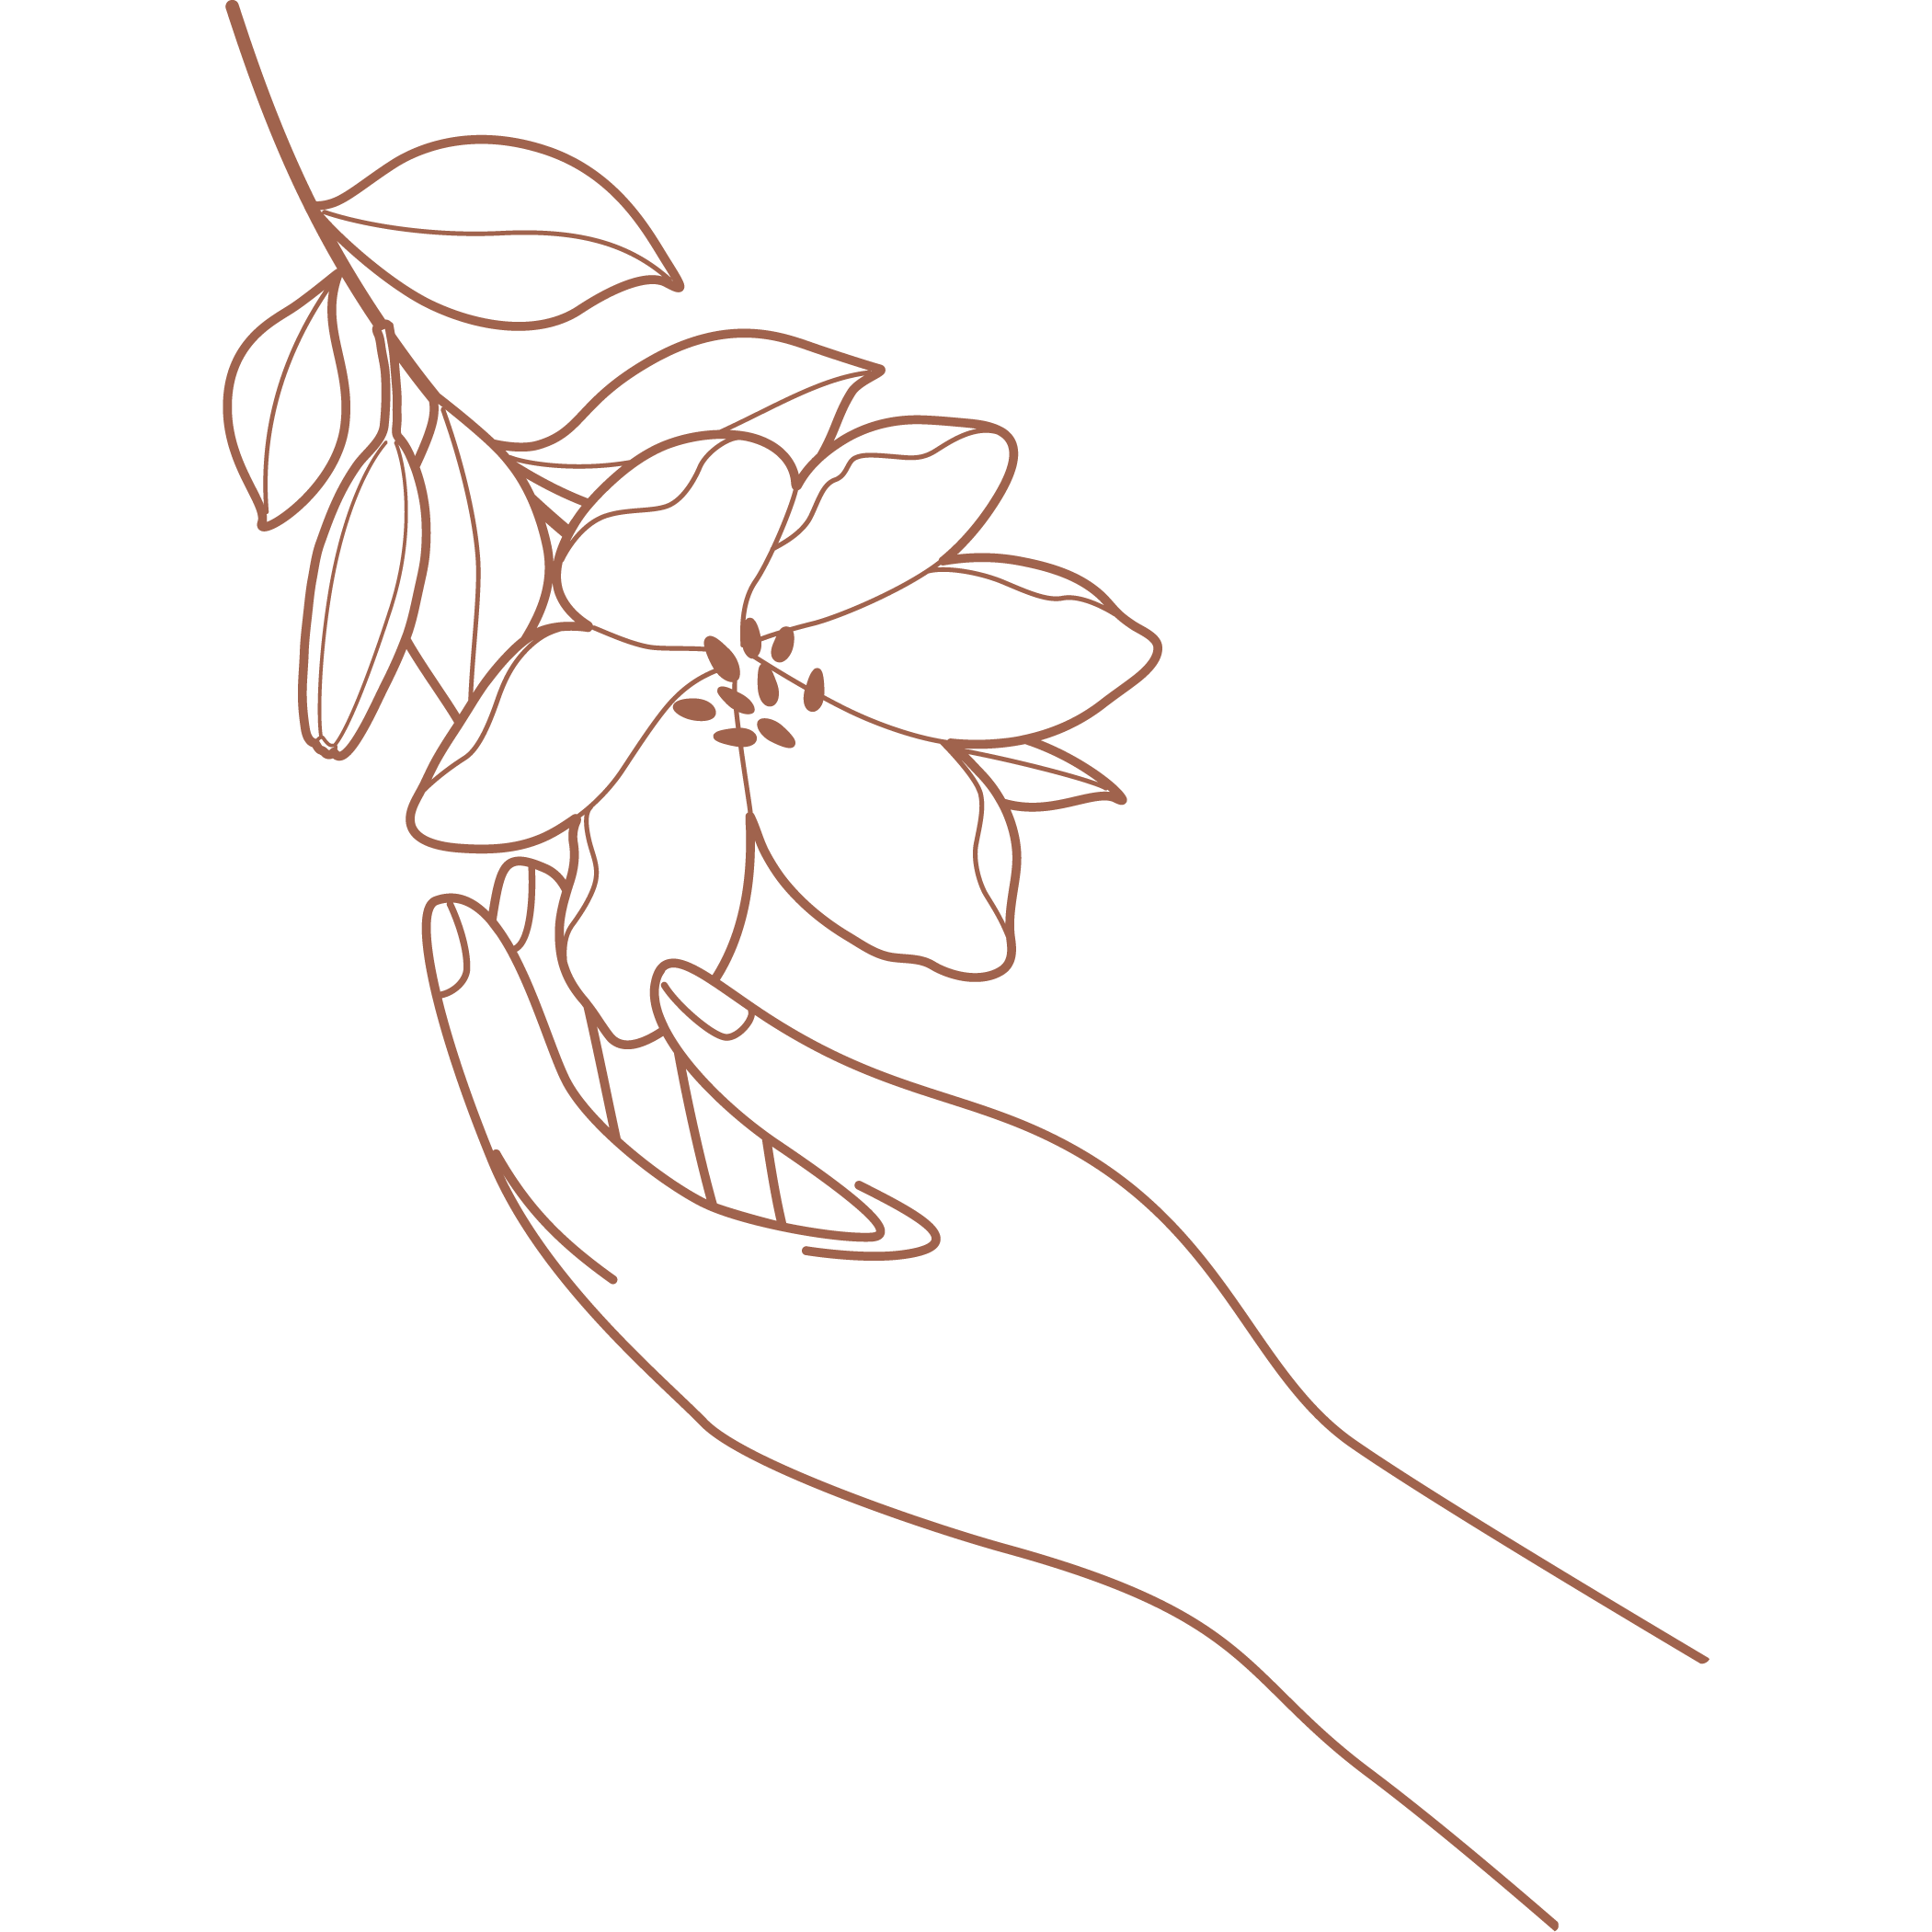 a sketch of a hand reaching a dried bloom upward gently